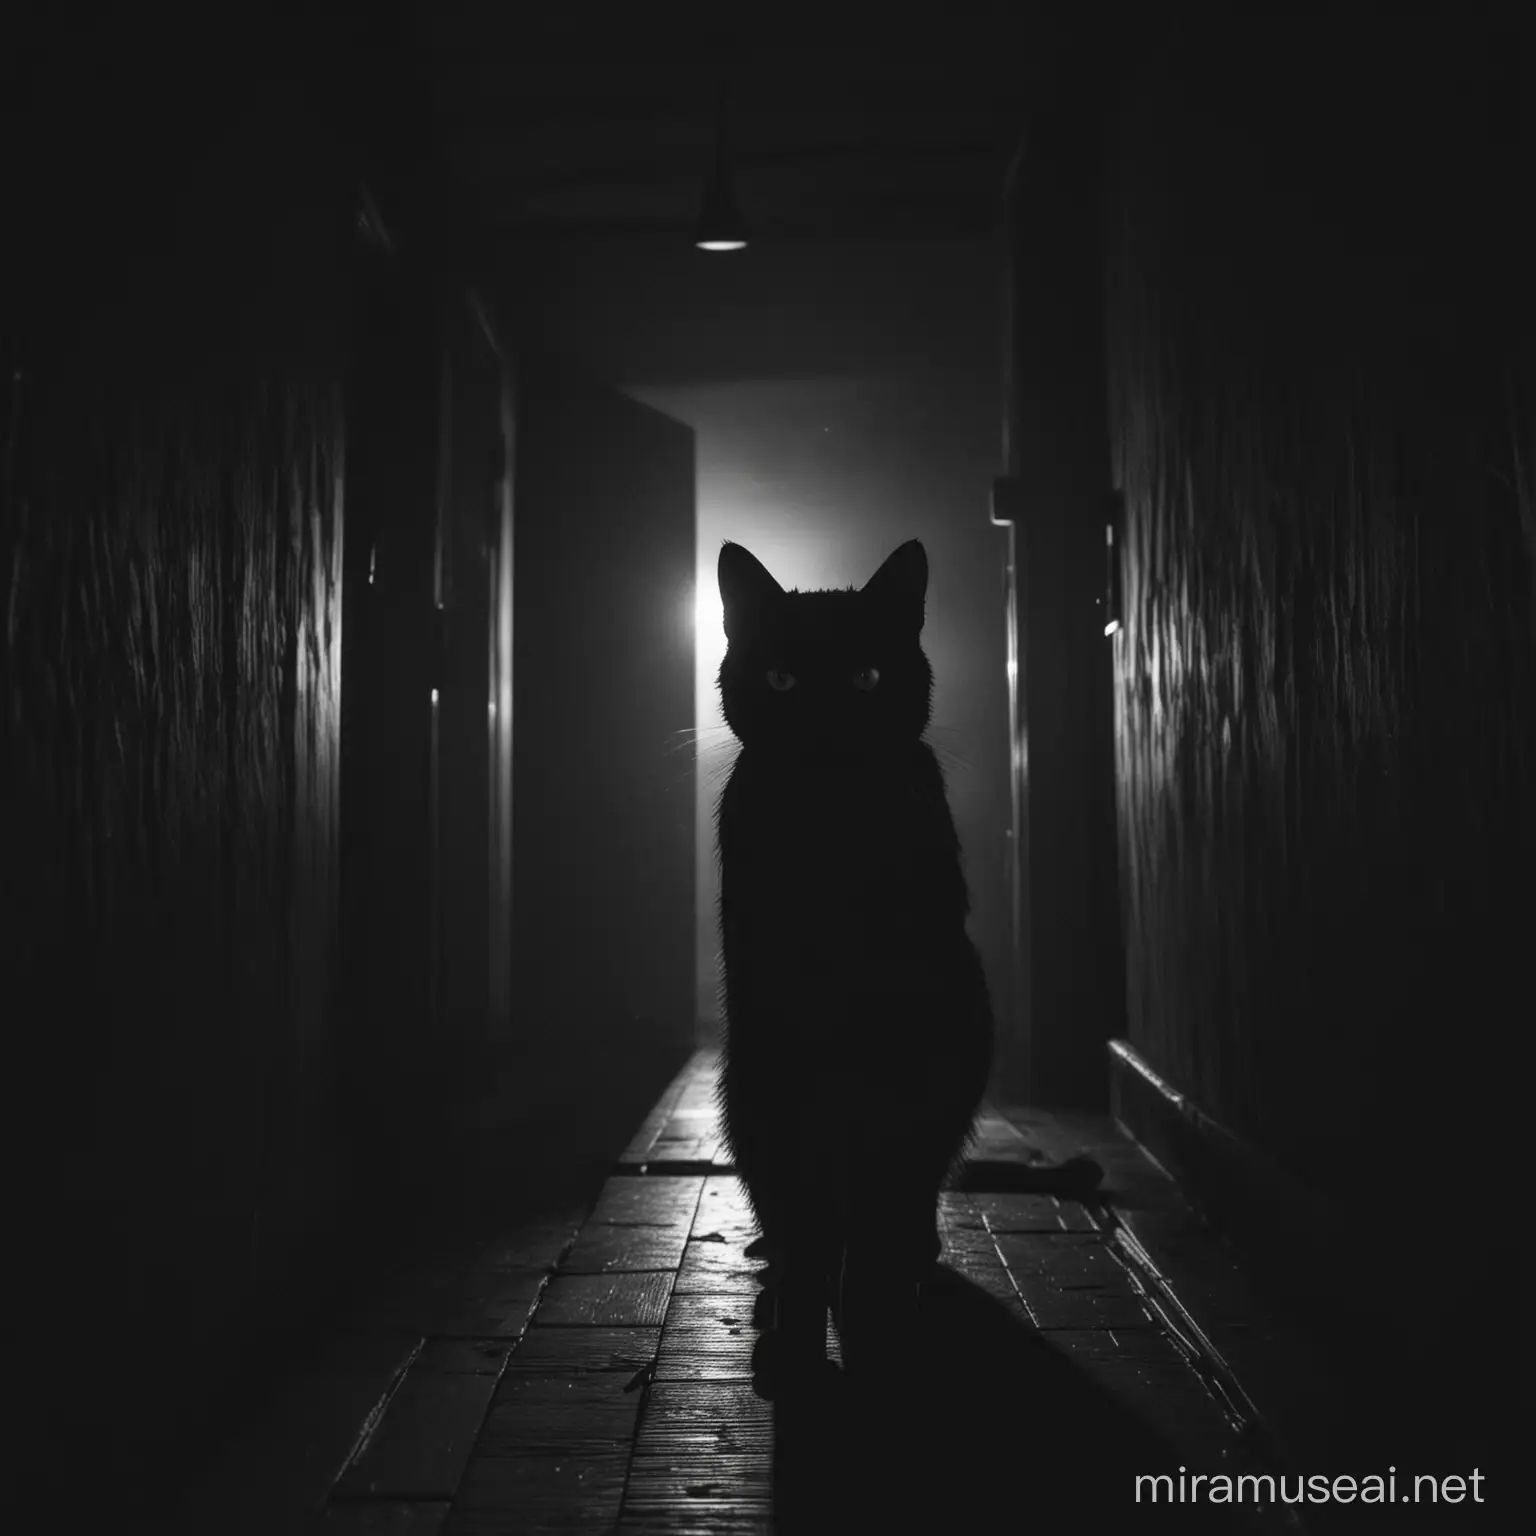 Sinister Black Cat Silhouette in Dark Room Nighttime